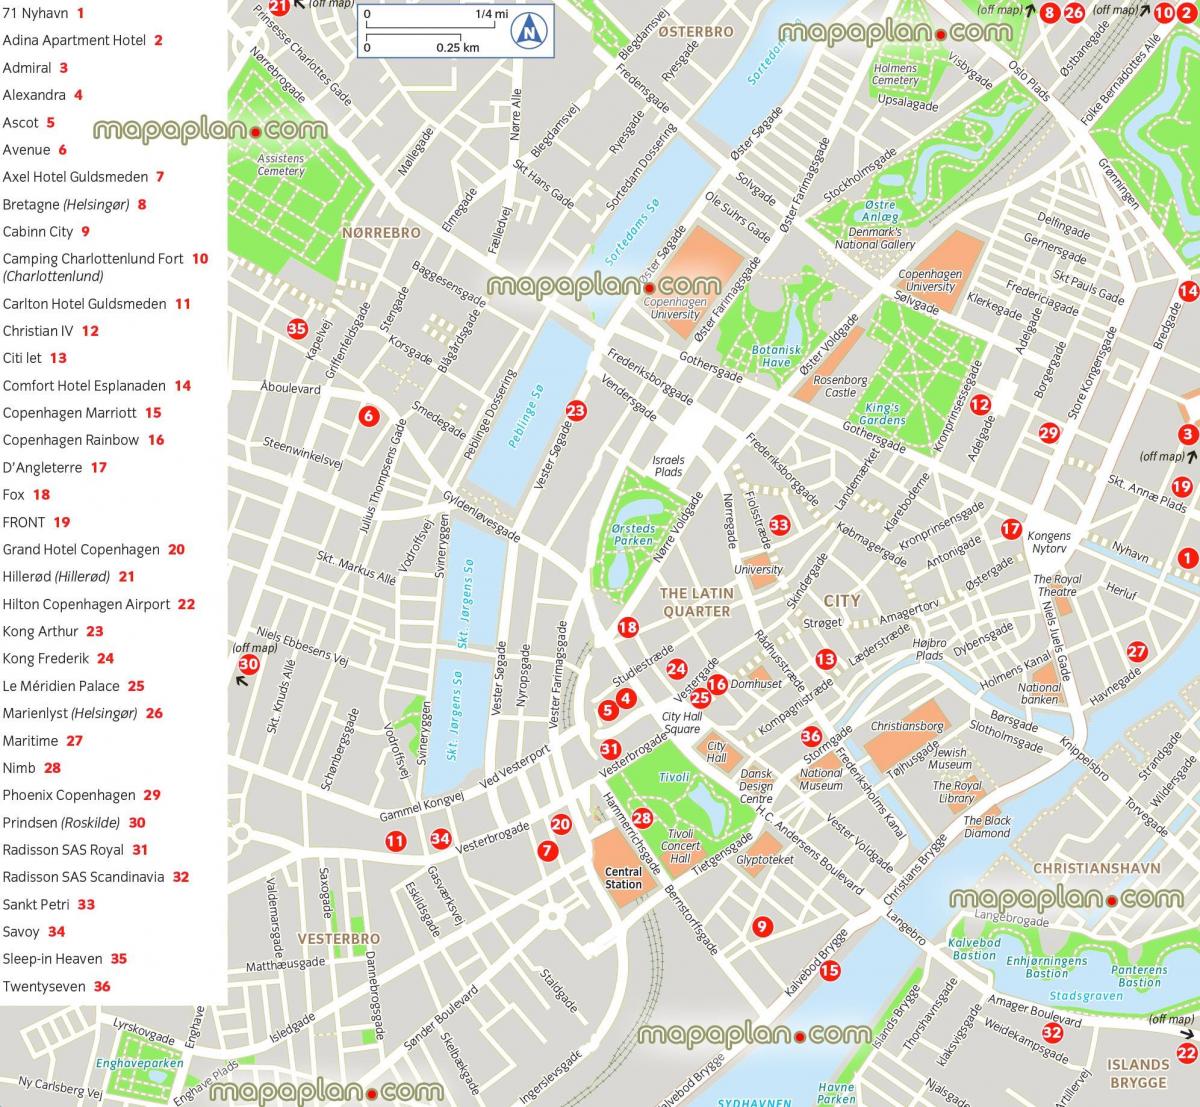 Mapa de lugares de interés de Copenhague